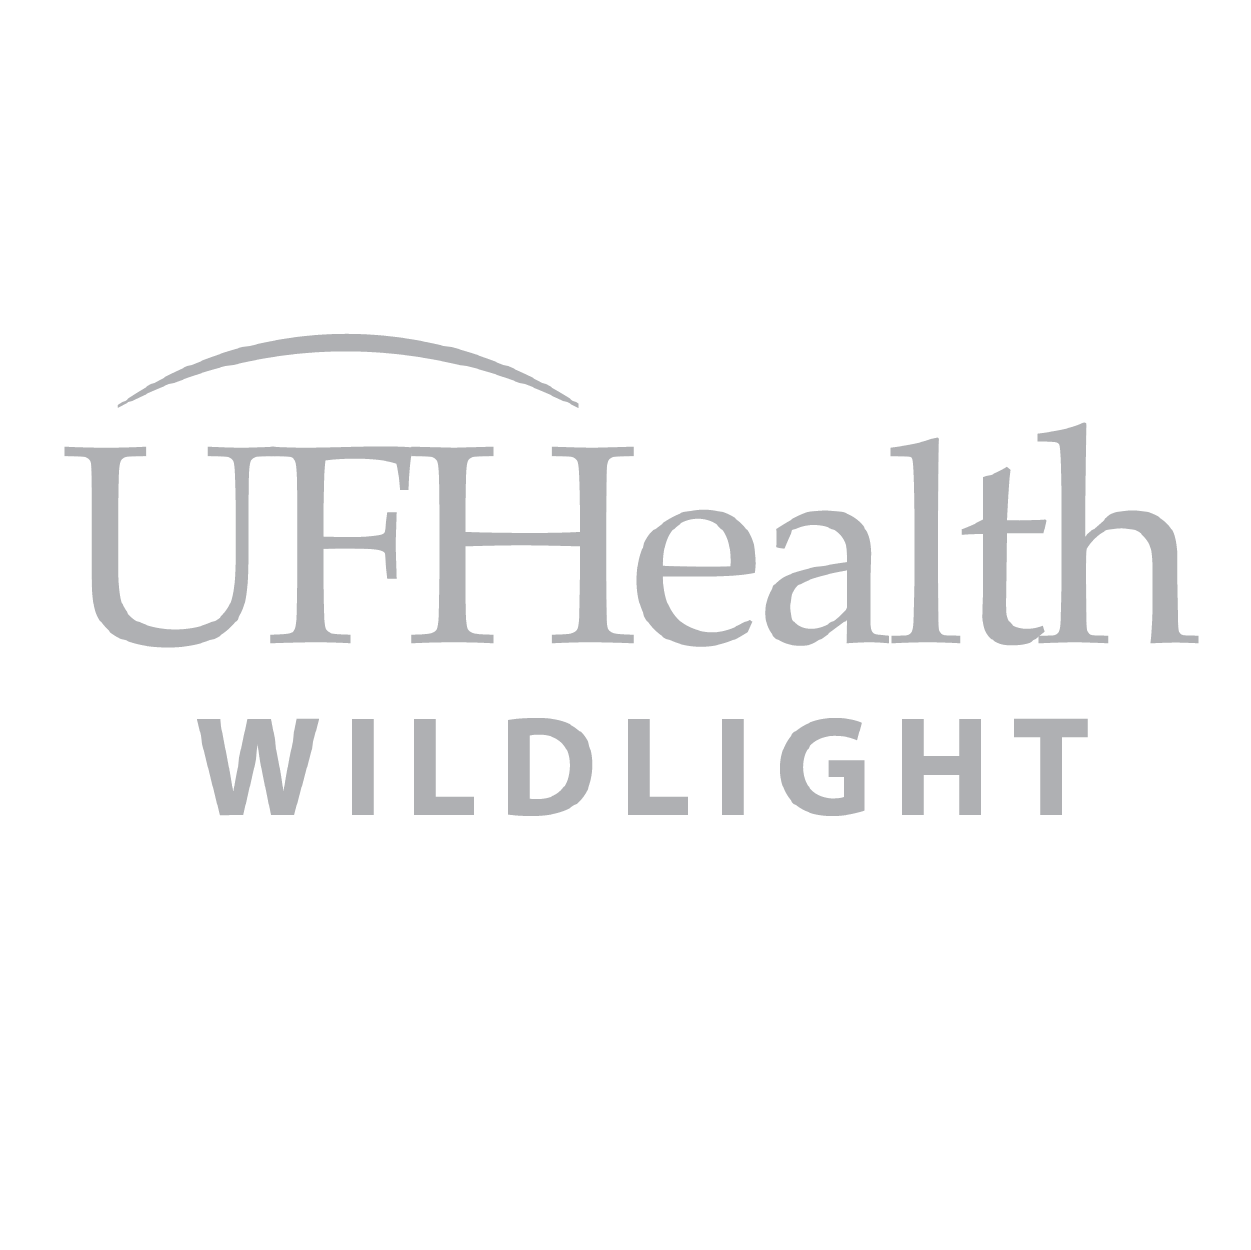 Uf health wildlight logo on a black background.